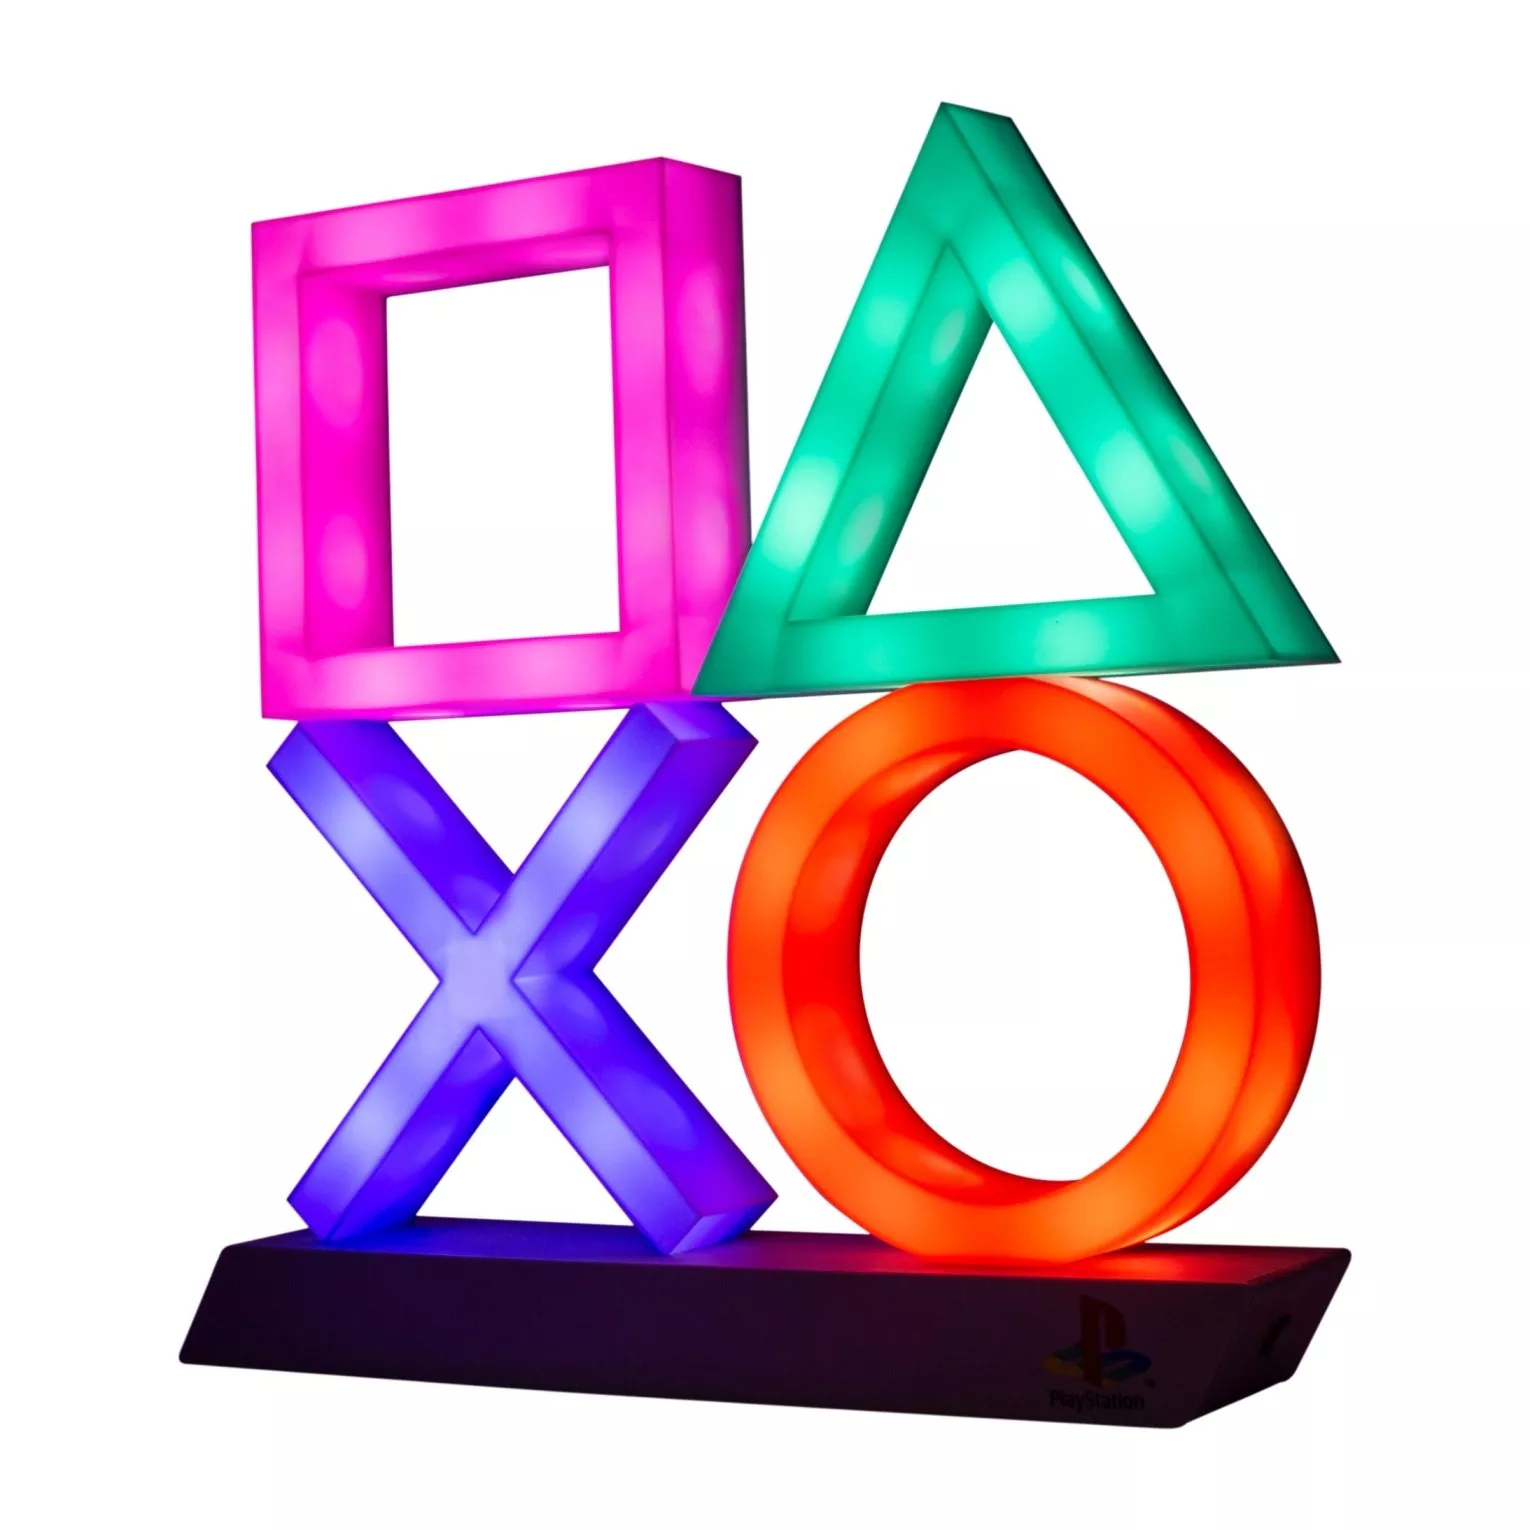 PlayStation icons Light XL